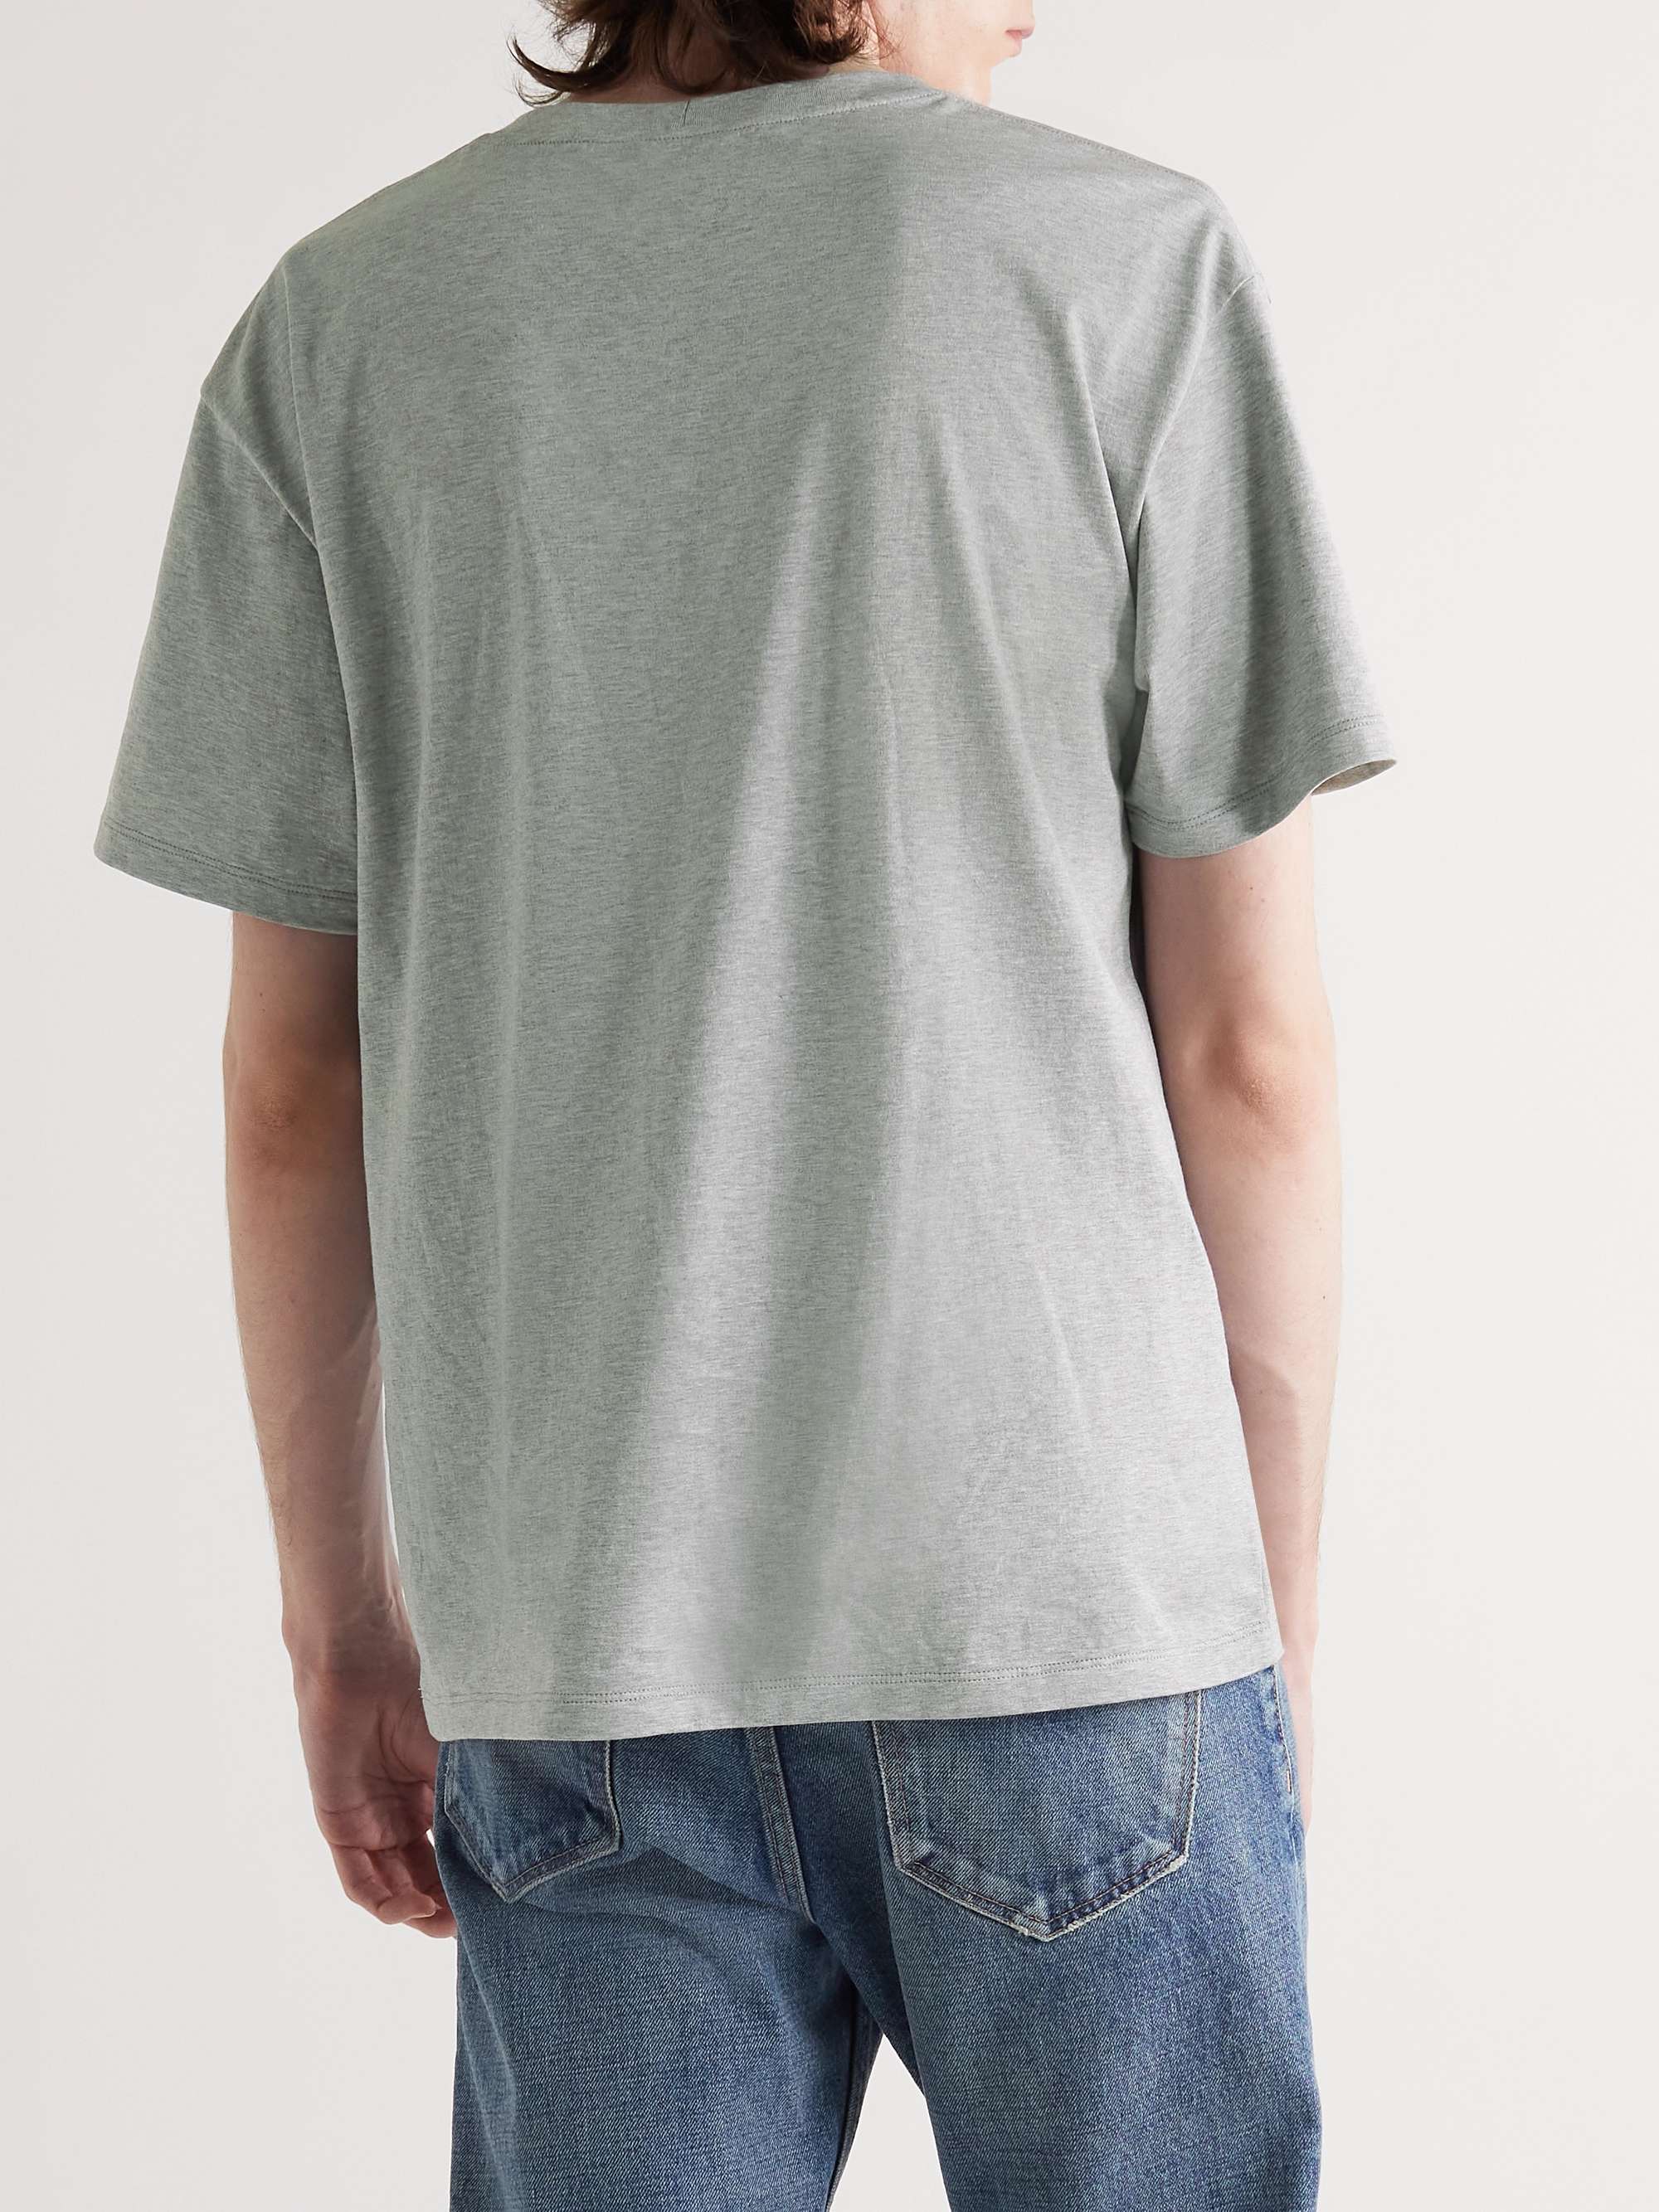 CELINE HOMME Oversized Logo-Print Cotton-Jersey T-Shirt